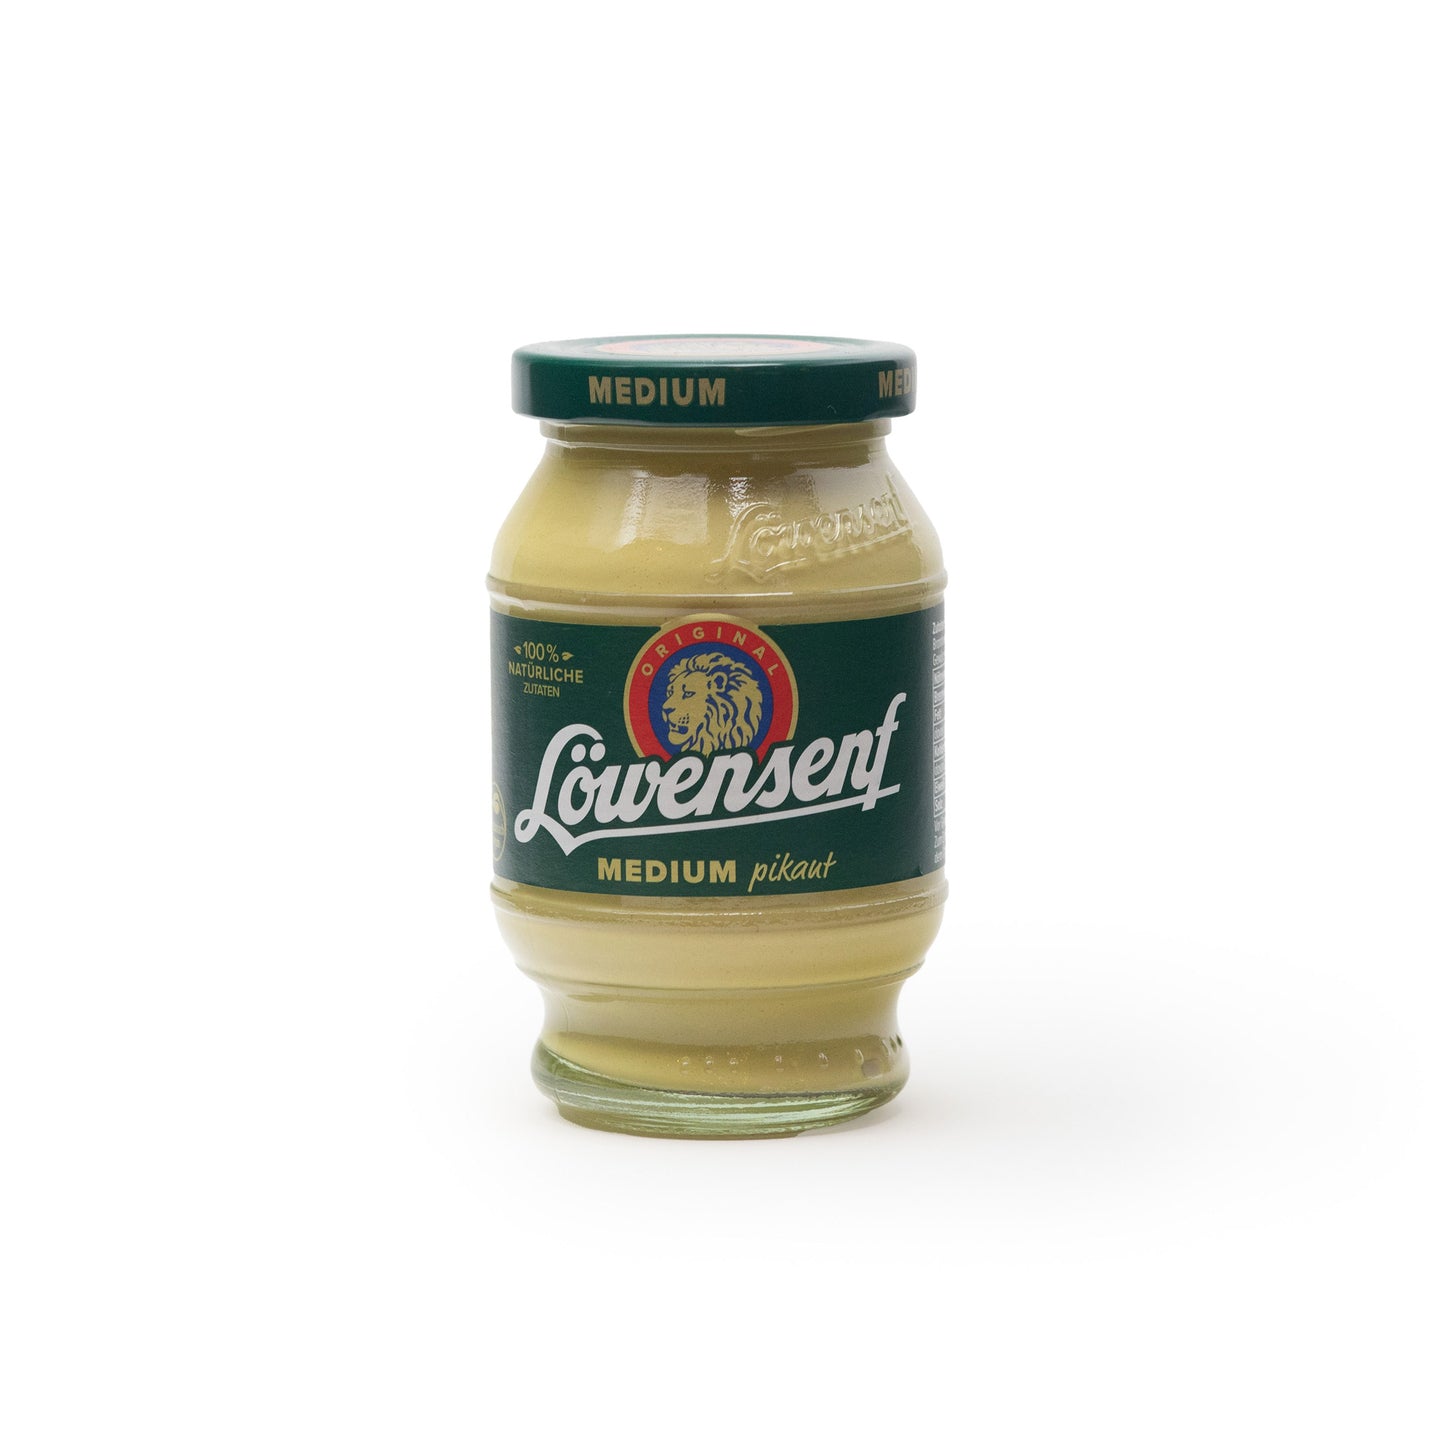 Lowensenf Mustard Medium Hot